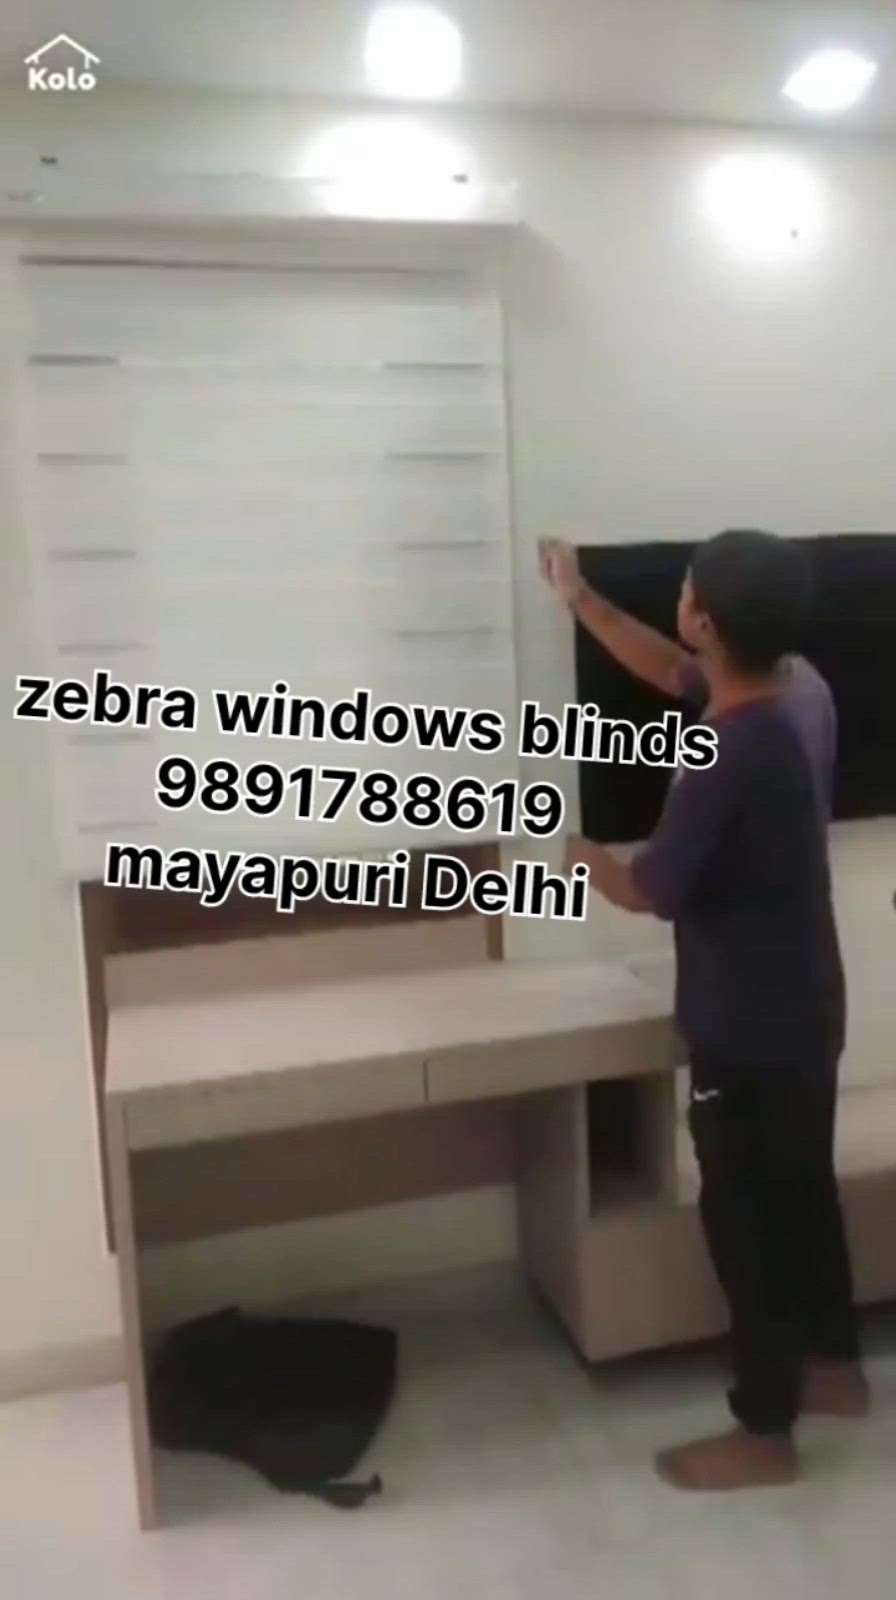 How to make windows blinds treatment making mayapuri Delhi contact number 9891788619